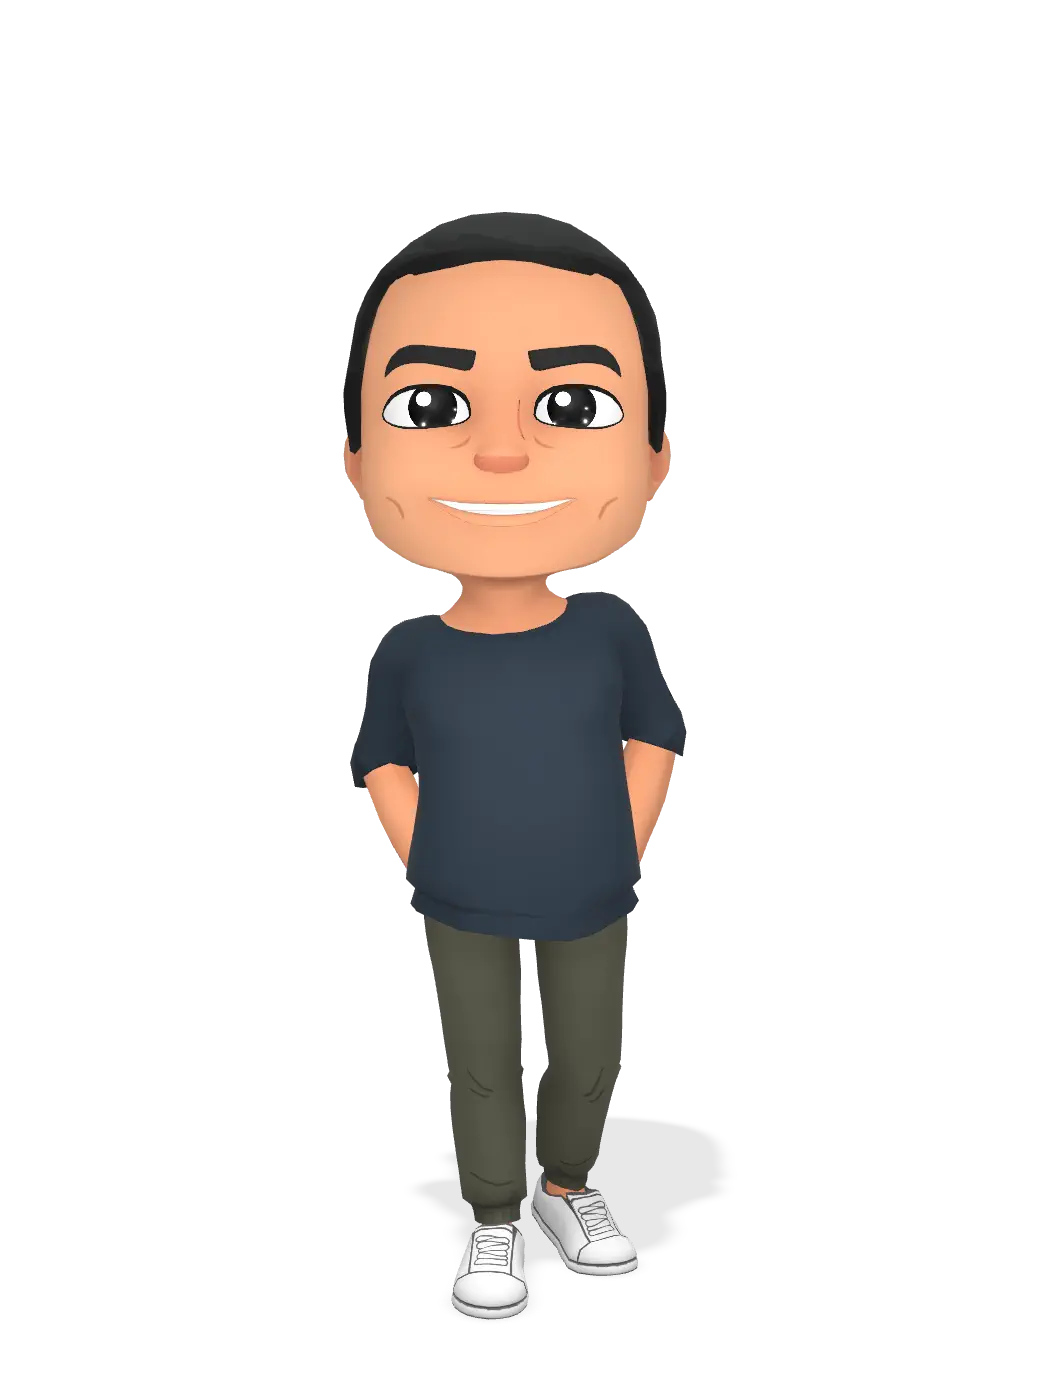 3D Bitmoji for afhernandez31 avatar